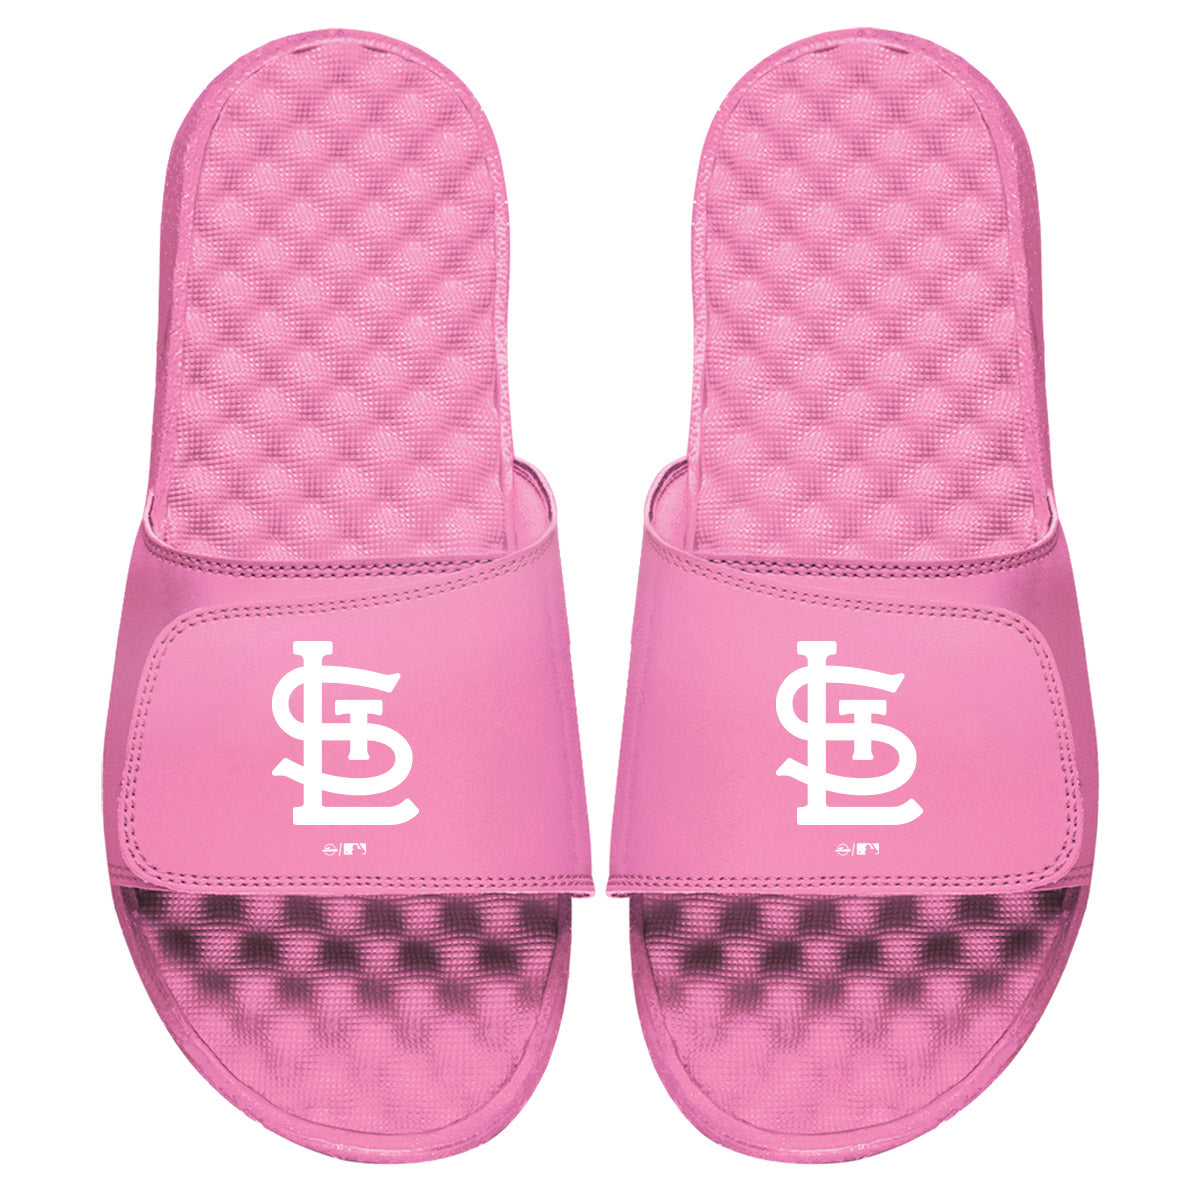 St Louis Cardinals Primary Pink Slides